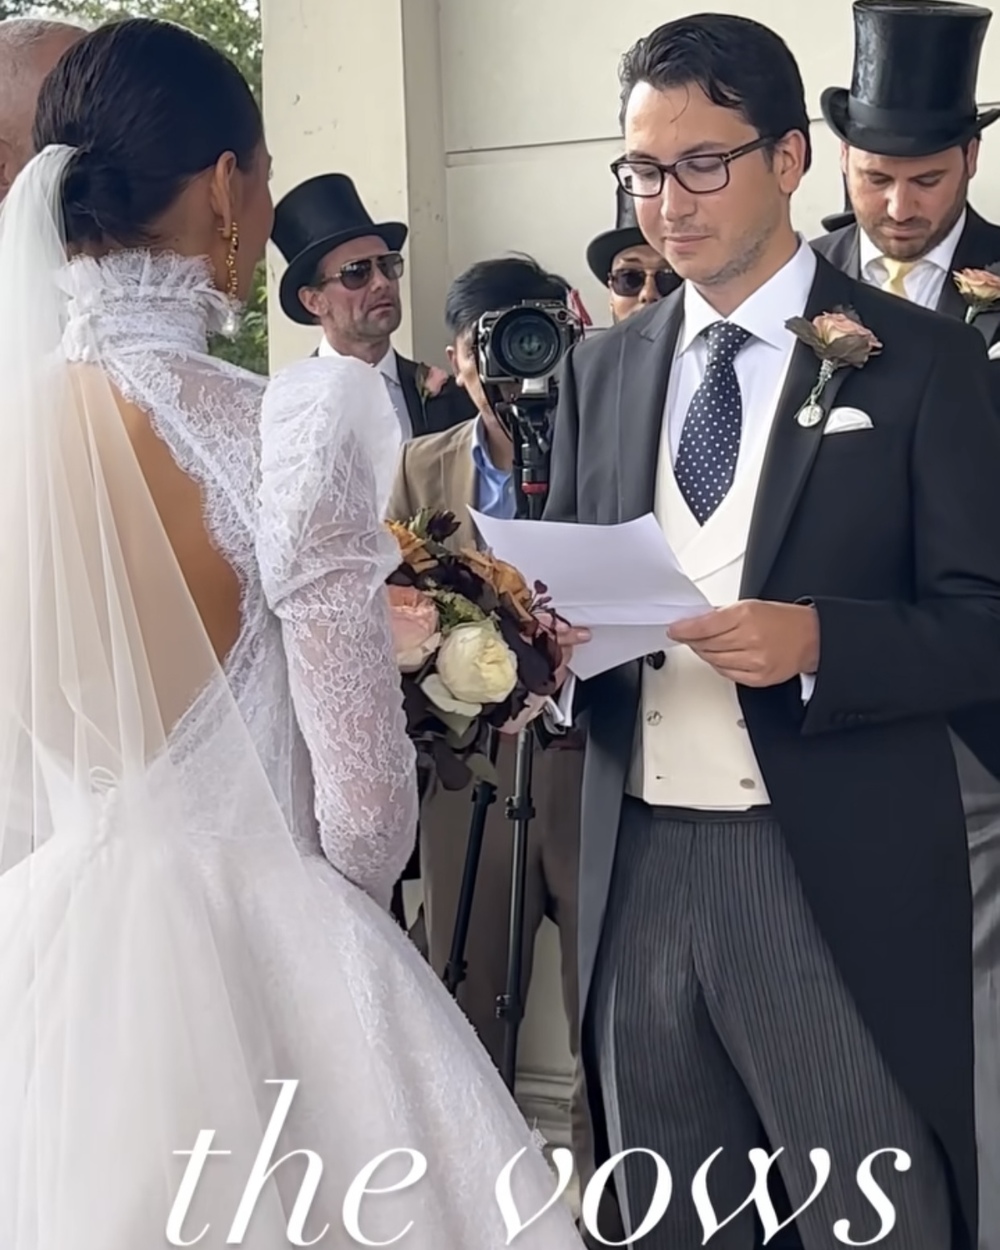 THE WEDDING ALBUM: Lovi Poe and Monty Blencowe - all the dreamy details at the #LoviGoesFullMonty wedding